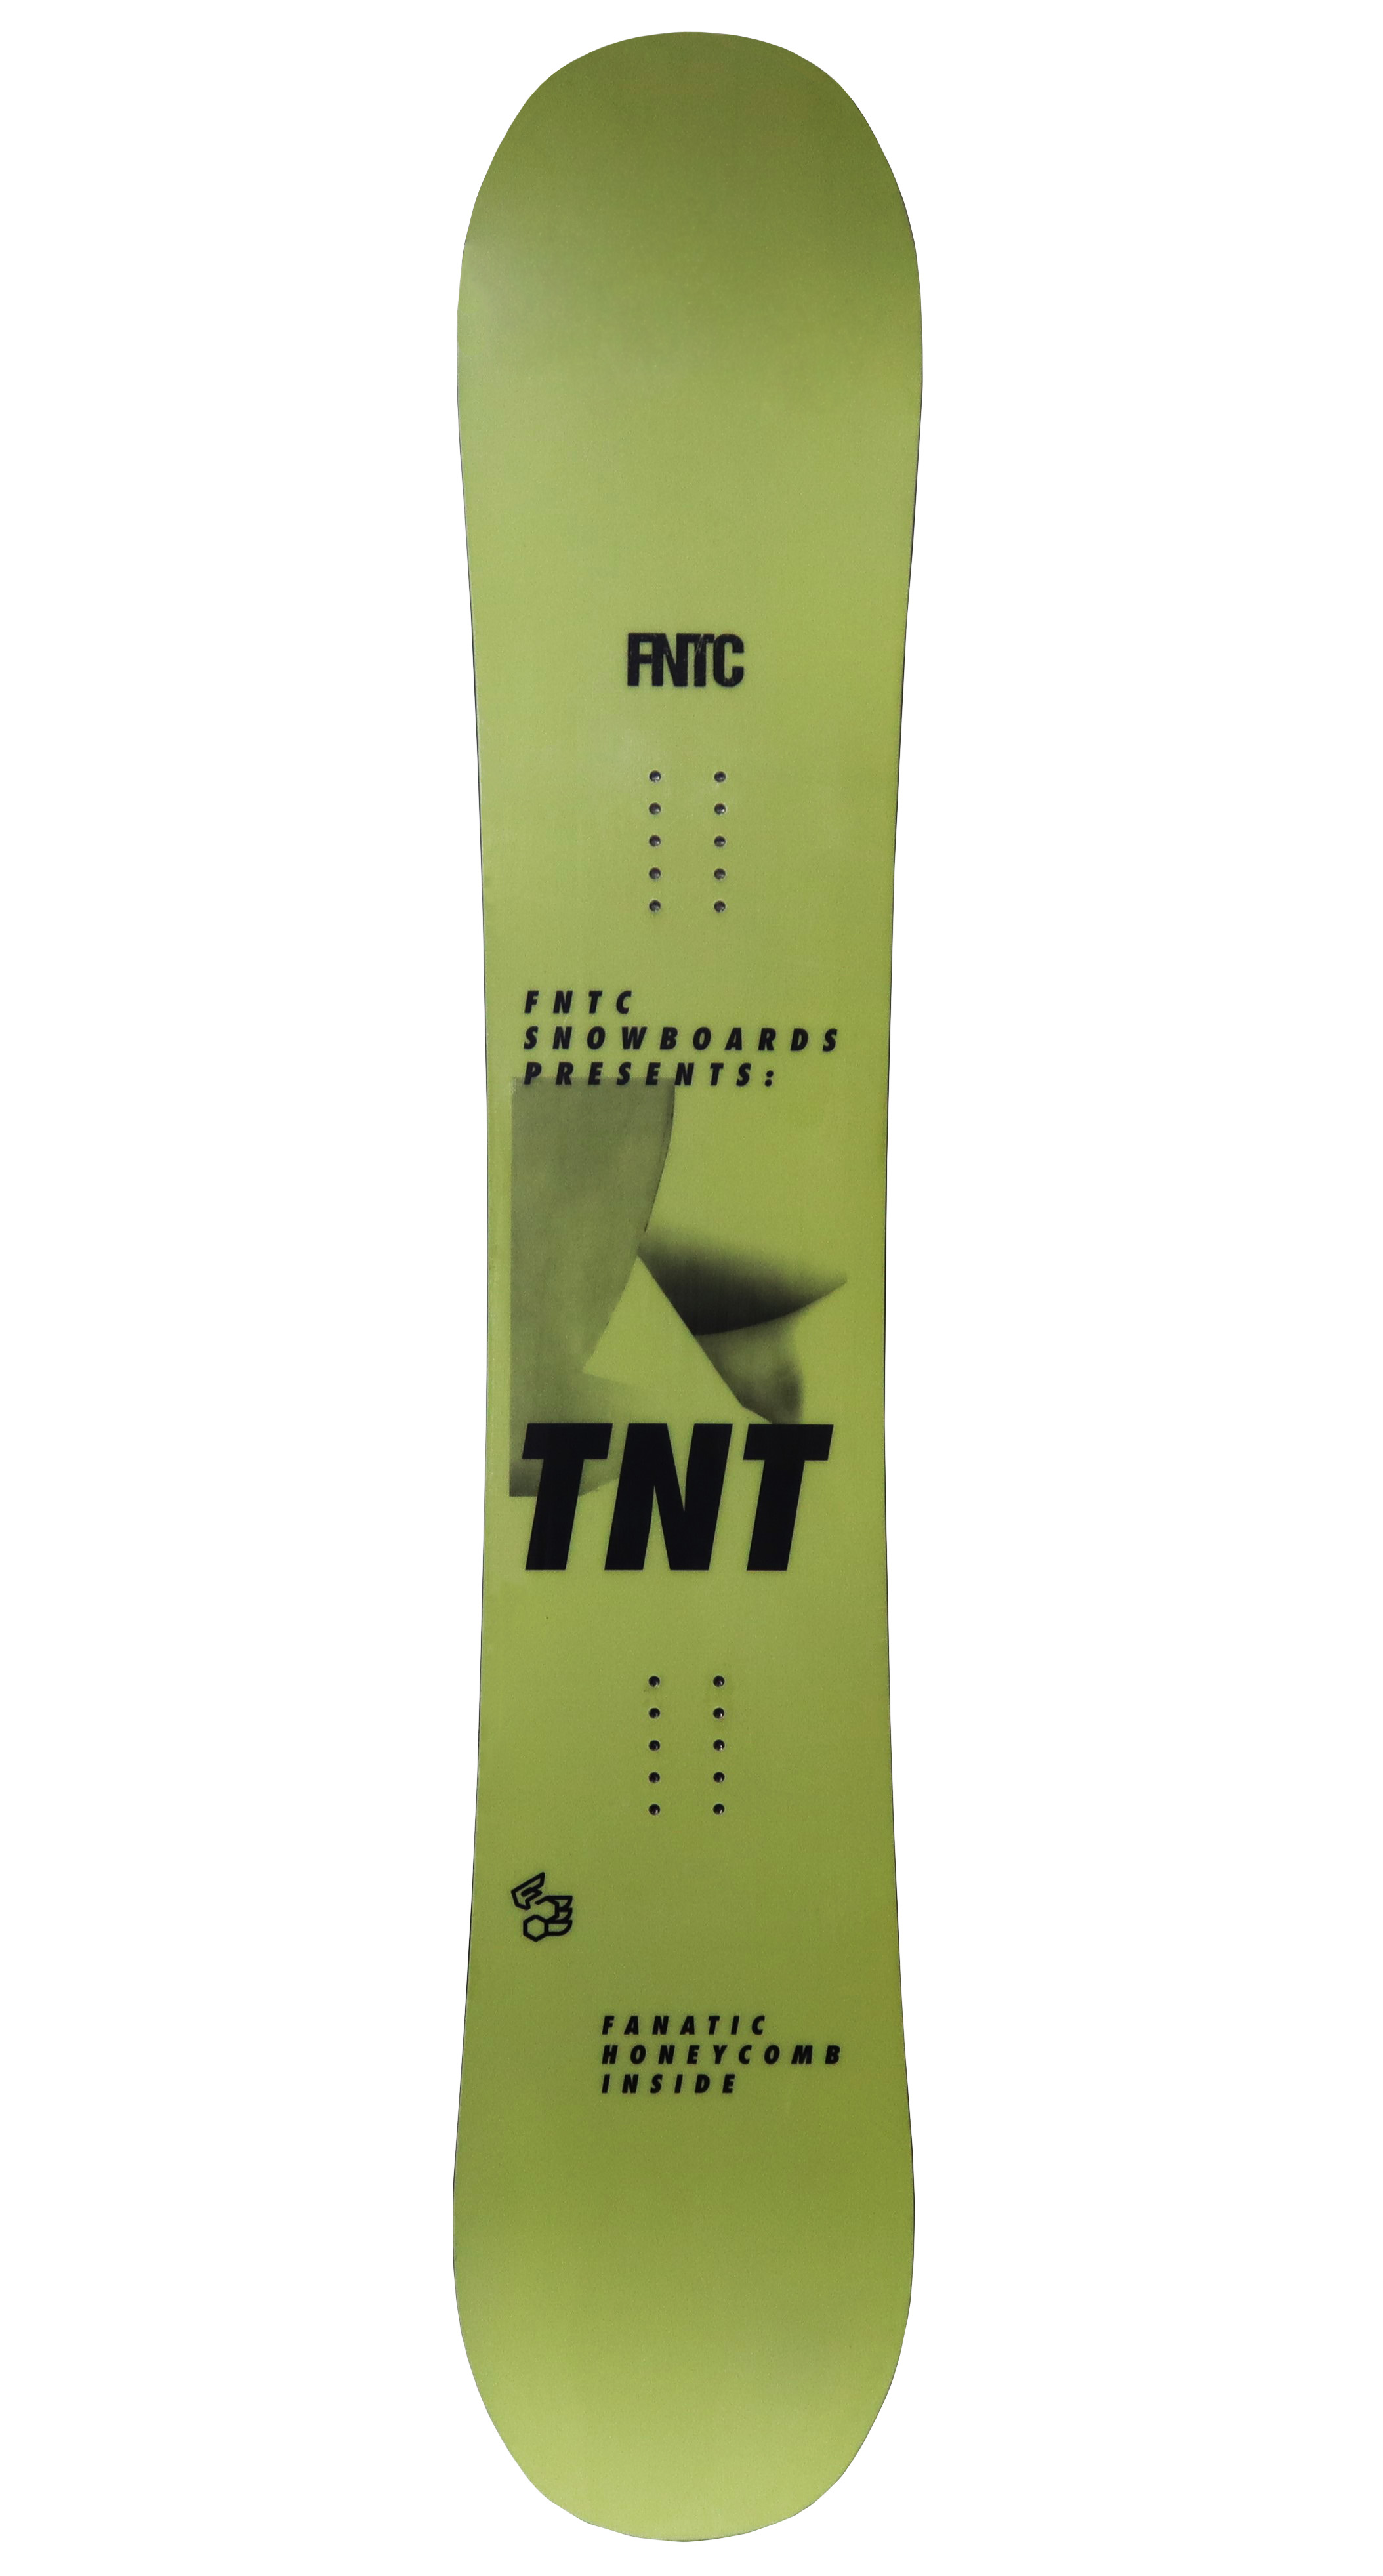 Сноуборд Fanatic 19-20 TNT Ivory, цвет желтый - фото 3